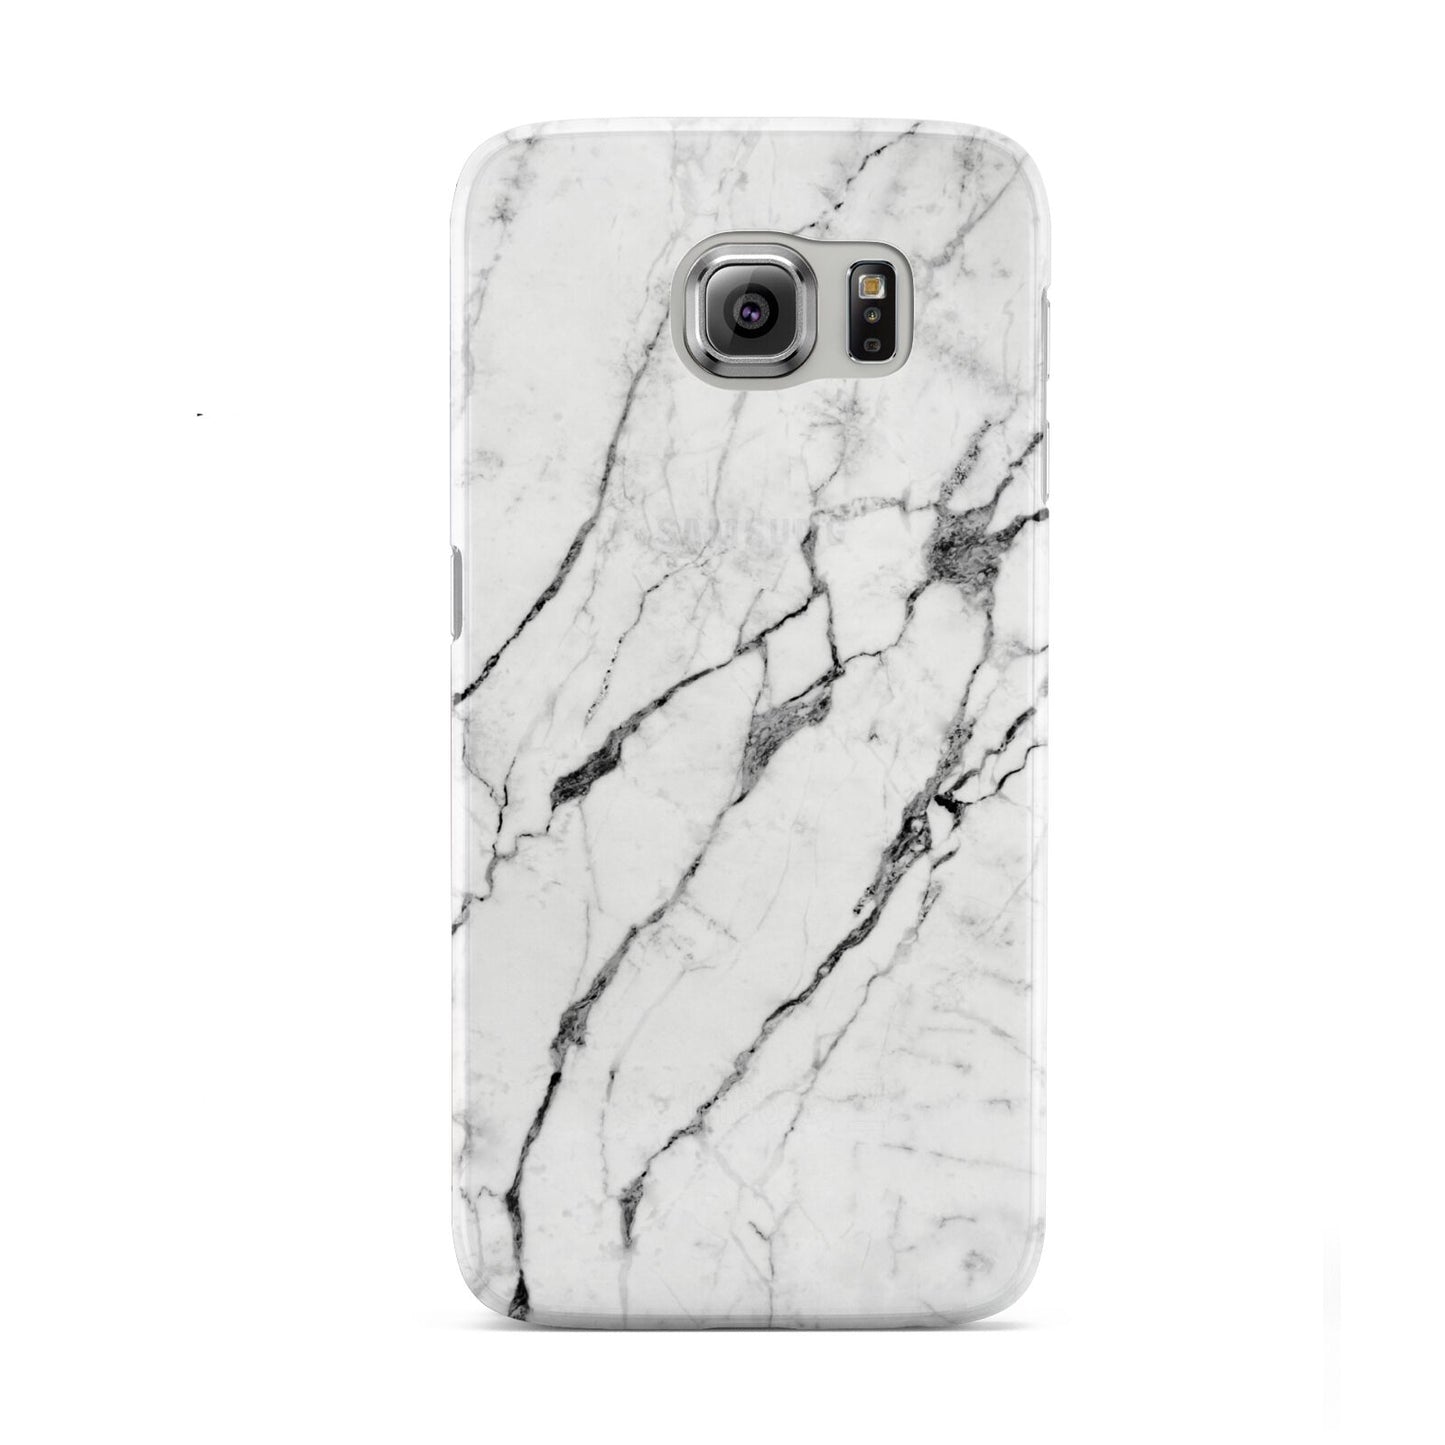 Marble White Samsung Galaxy S6 Case